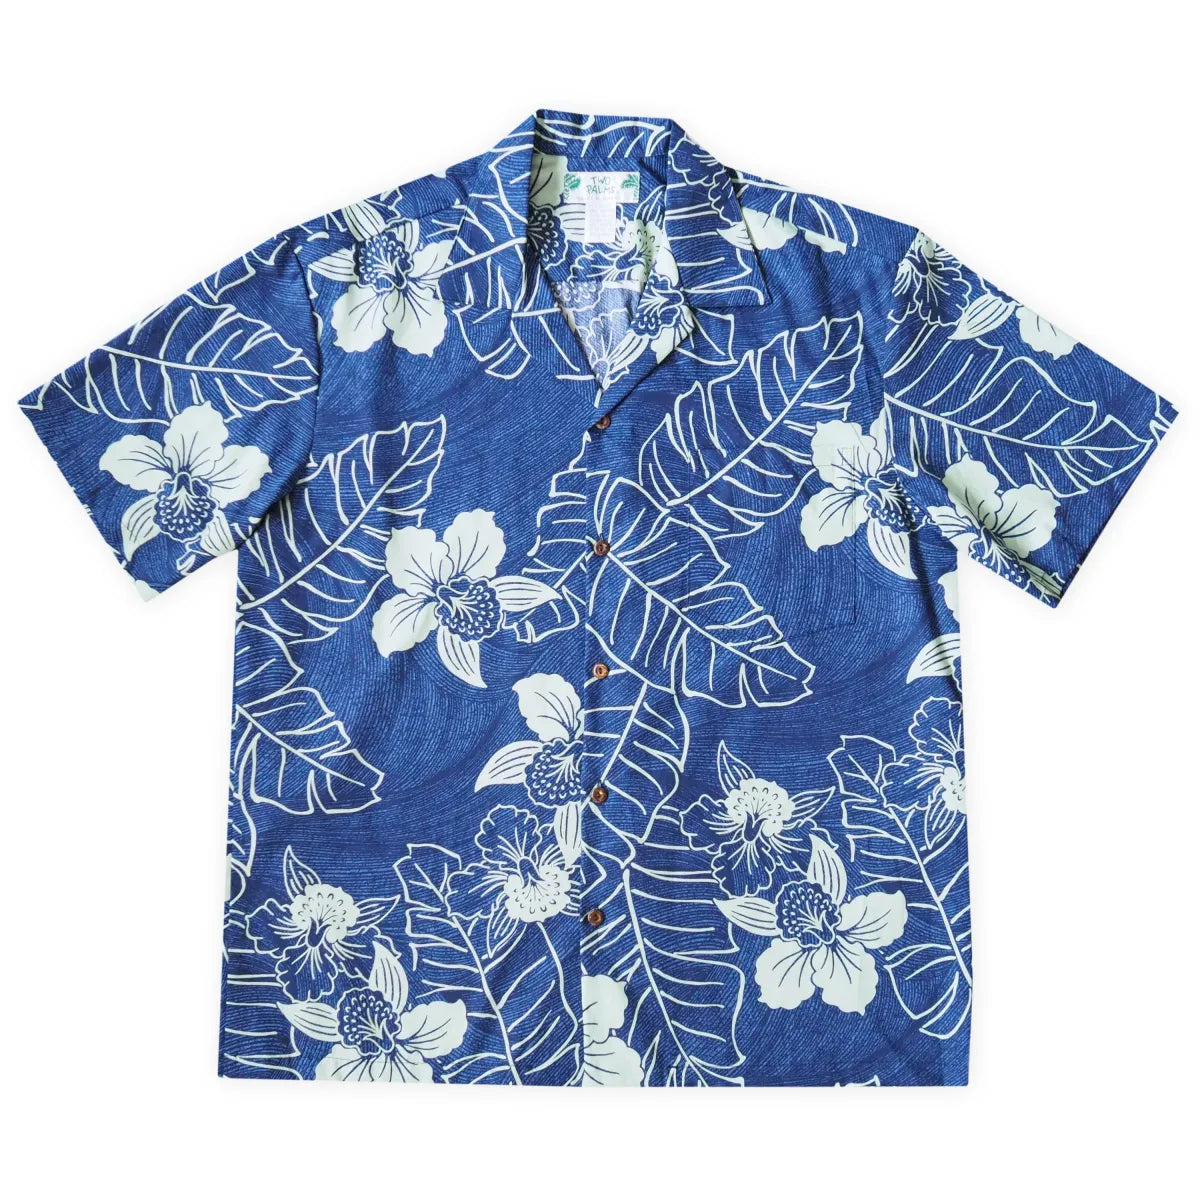 Ka’anapali blue hawaiian cotton shirt